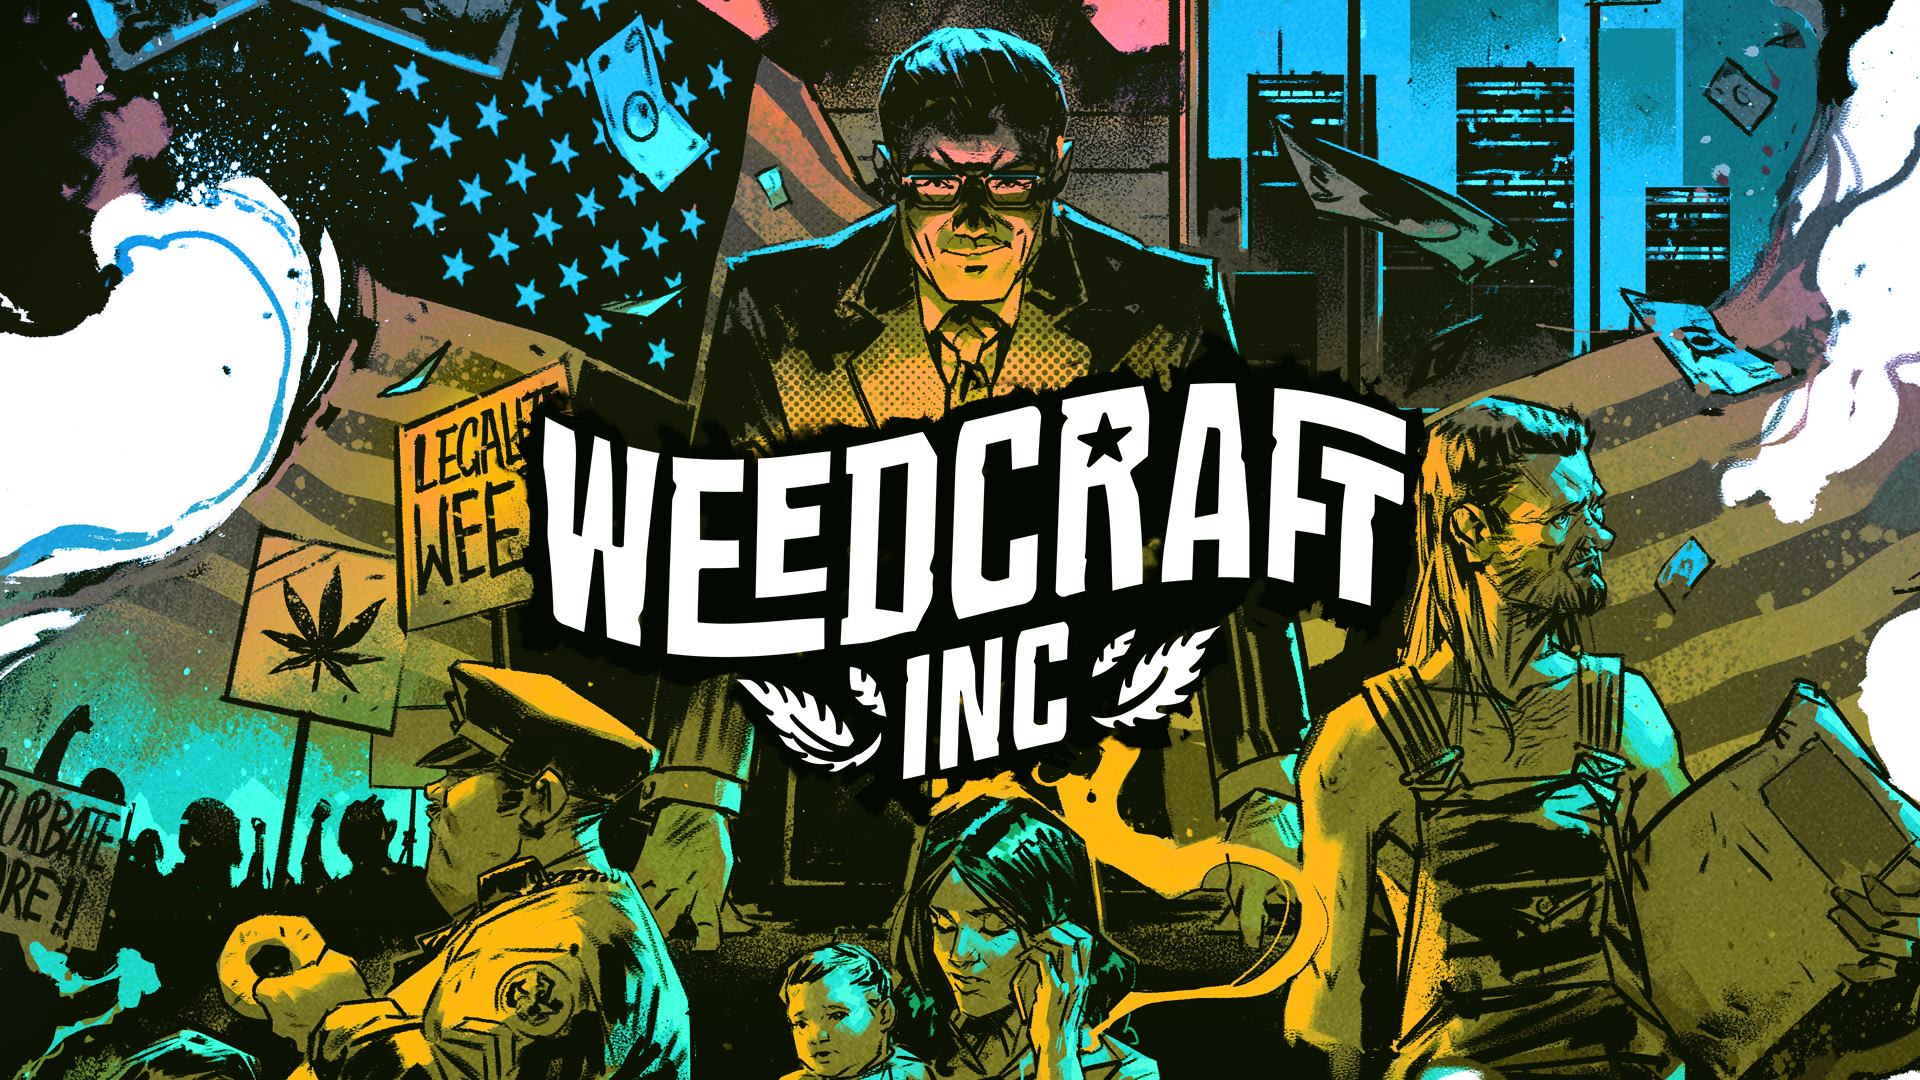 Weedcraft Inc 1